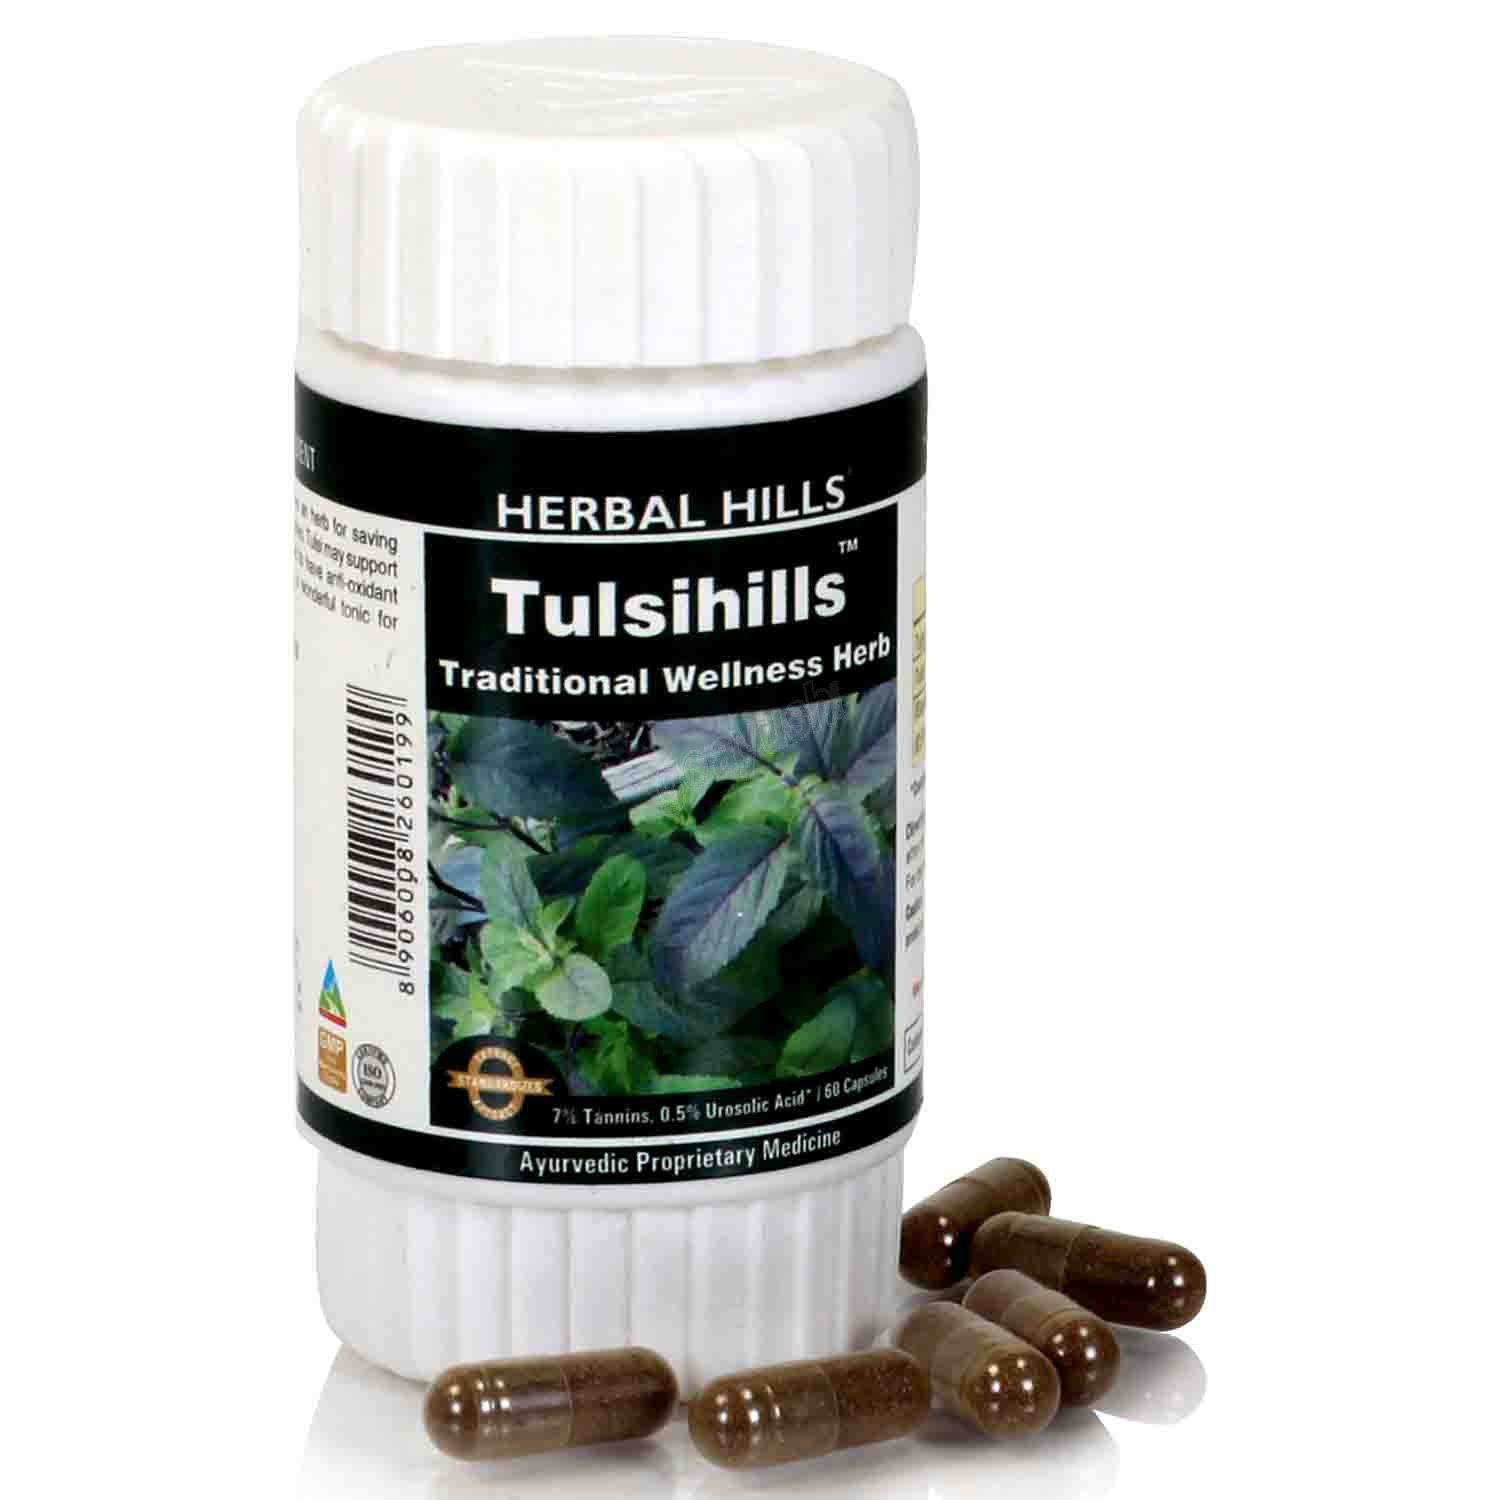 Buy Herbal Hills Tulsihills Capsule at Best Price Online